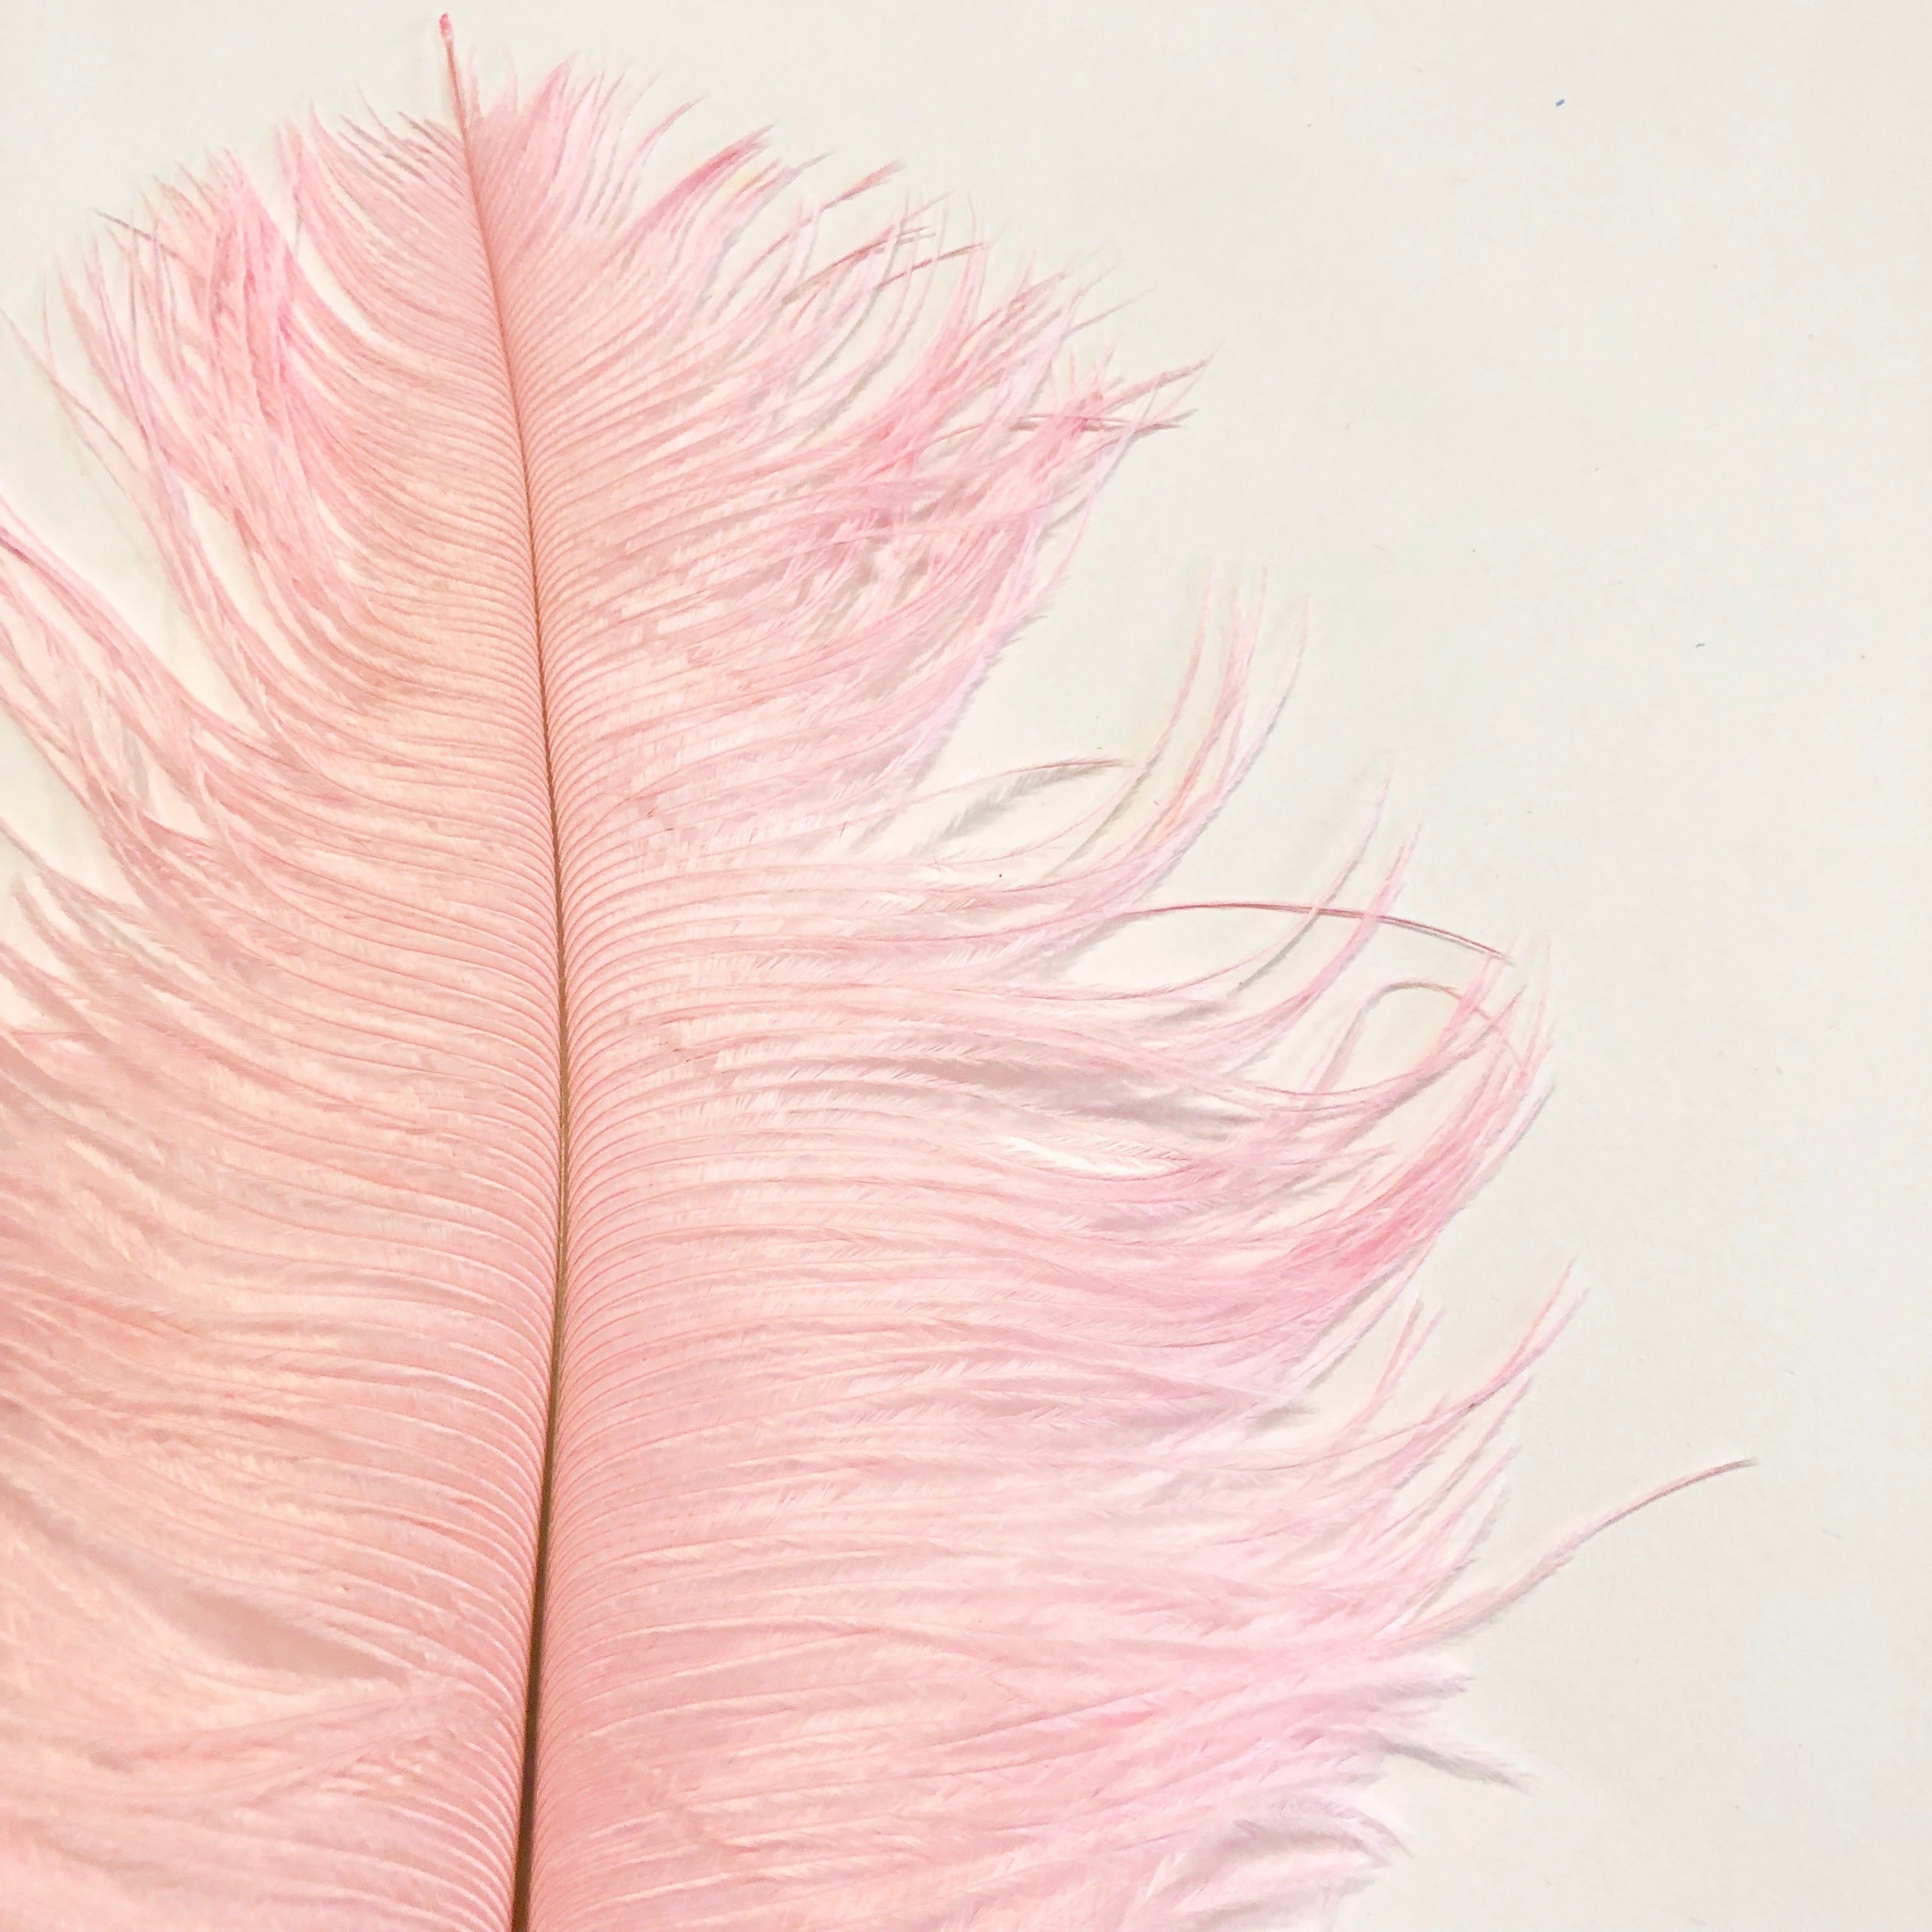 Ostrich Feather Drab 37-42cm x 5 pcs - Pink ((SECONDS))